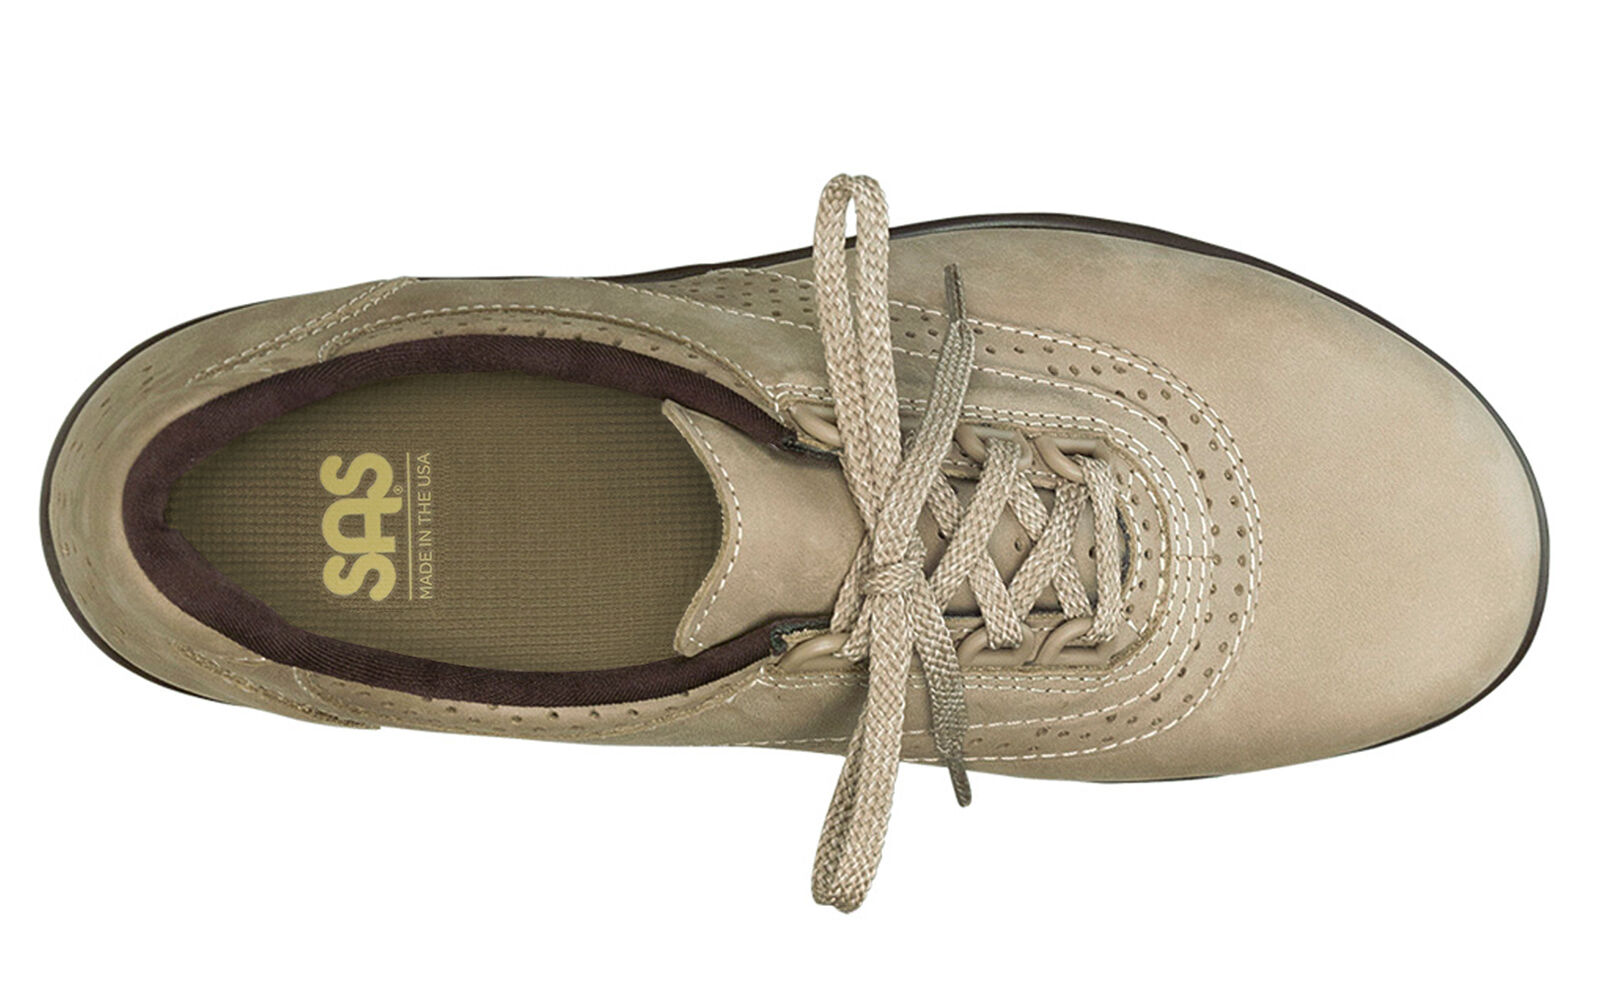 sas shoes walk easy